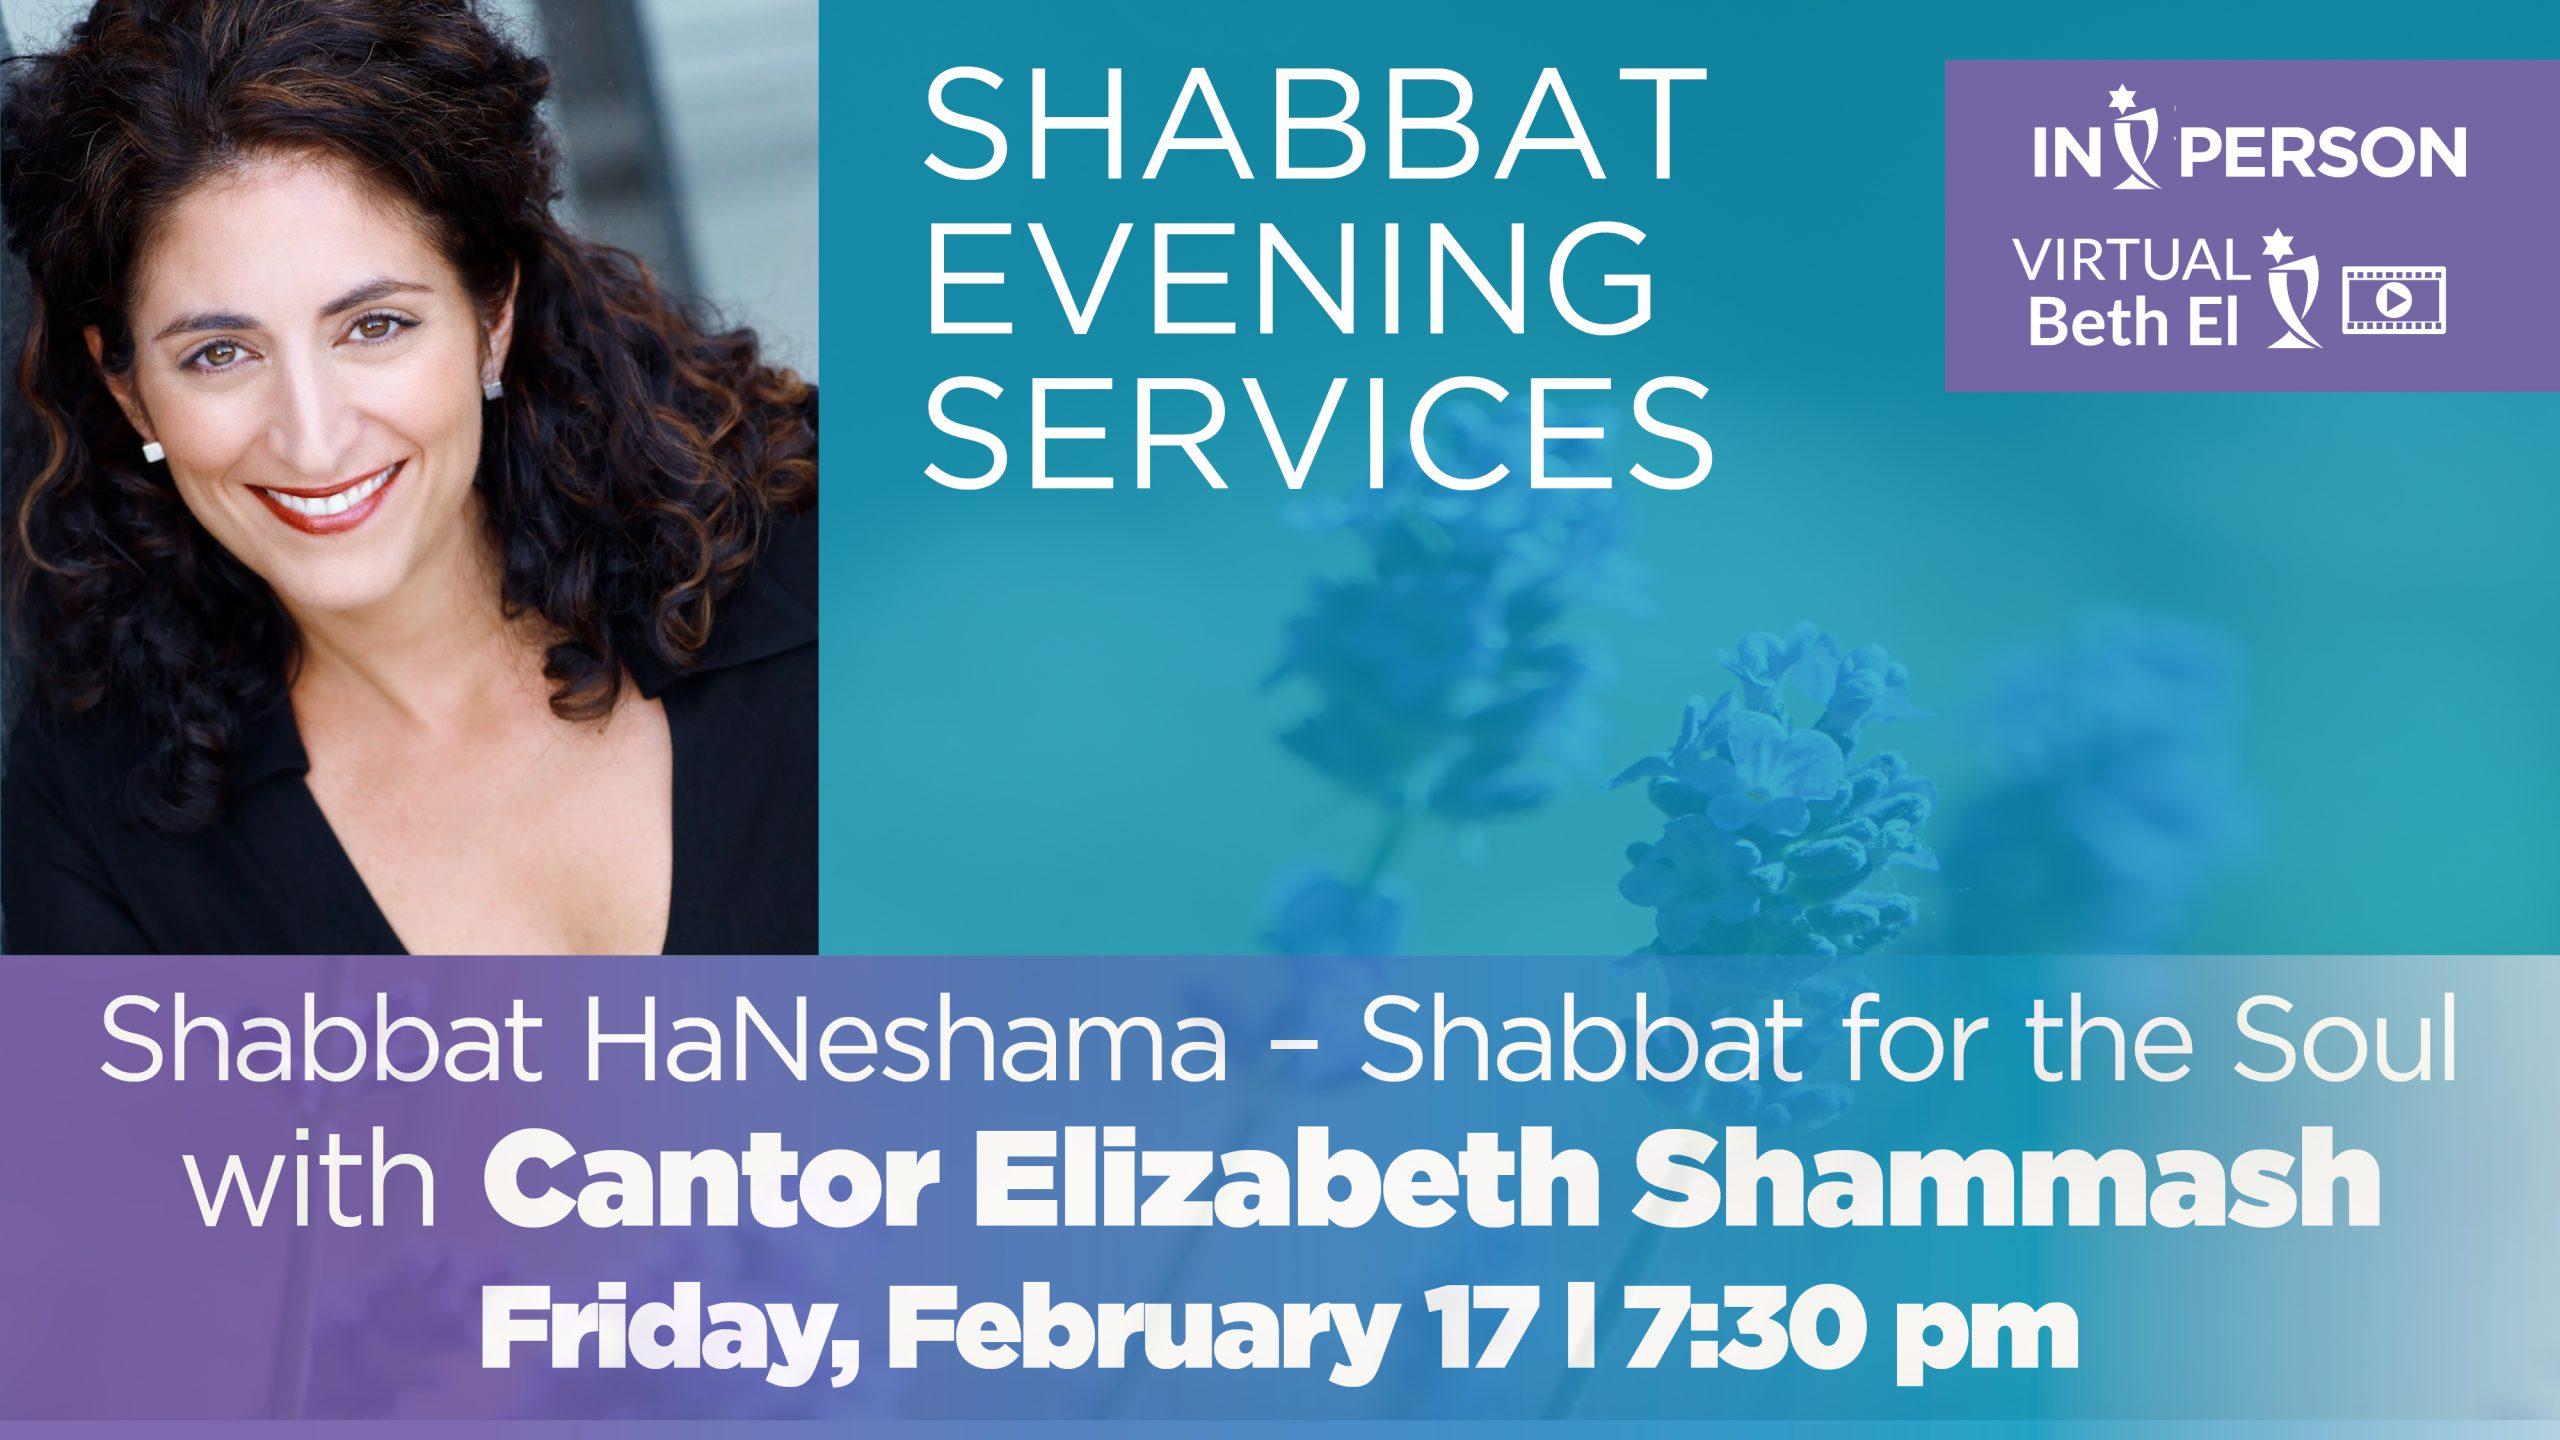 Shabbat Evening Services - Shabbat HaNeshama Shabbat for the Soul with Cantor Elizabeth Shammash, event graphic for Temple Beth El of Boca Raton